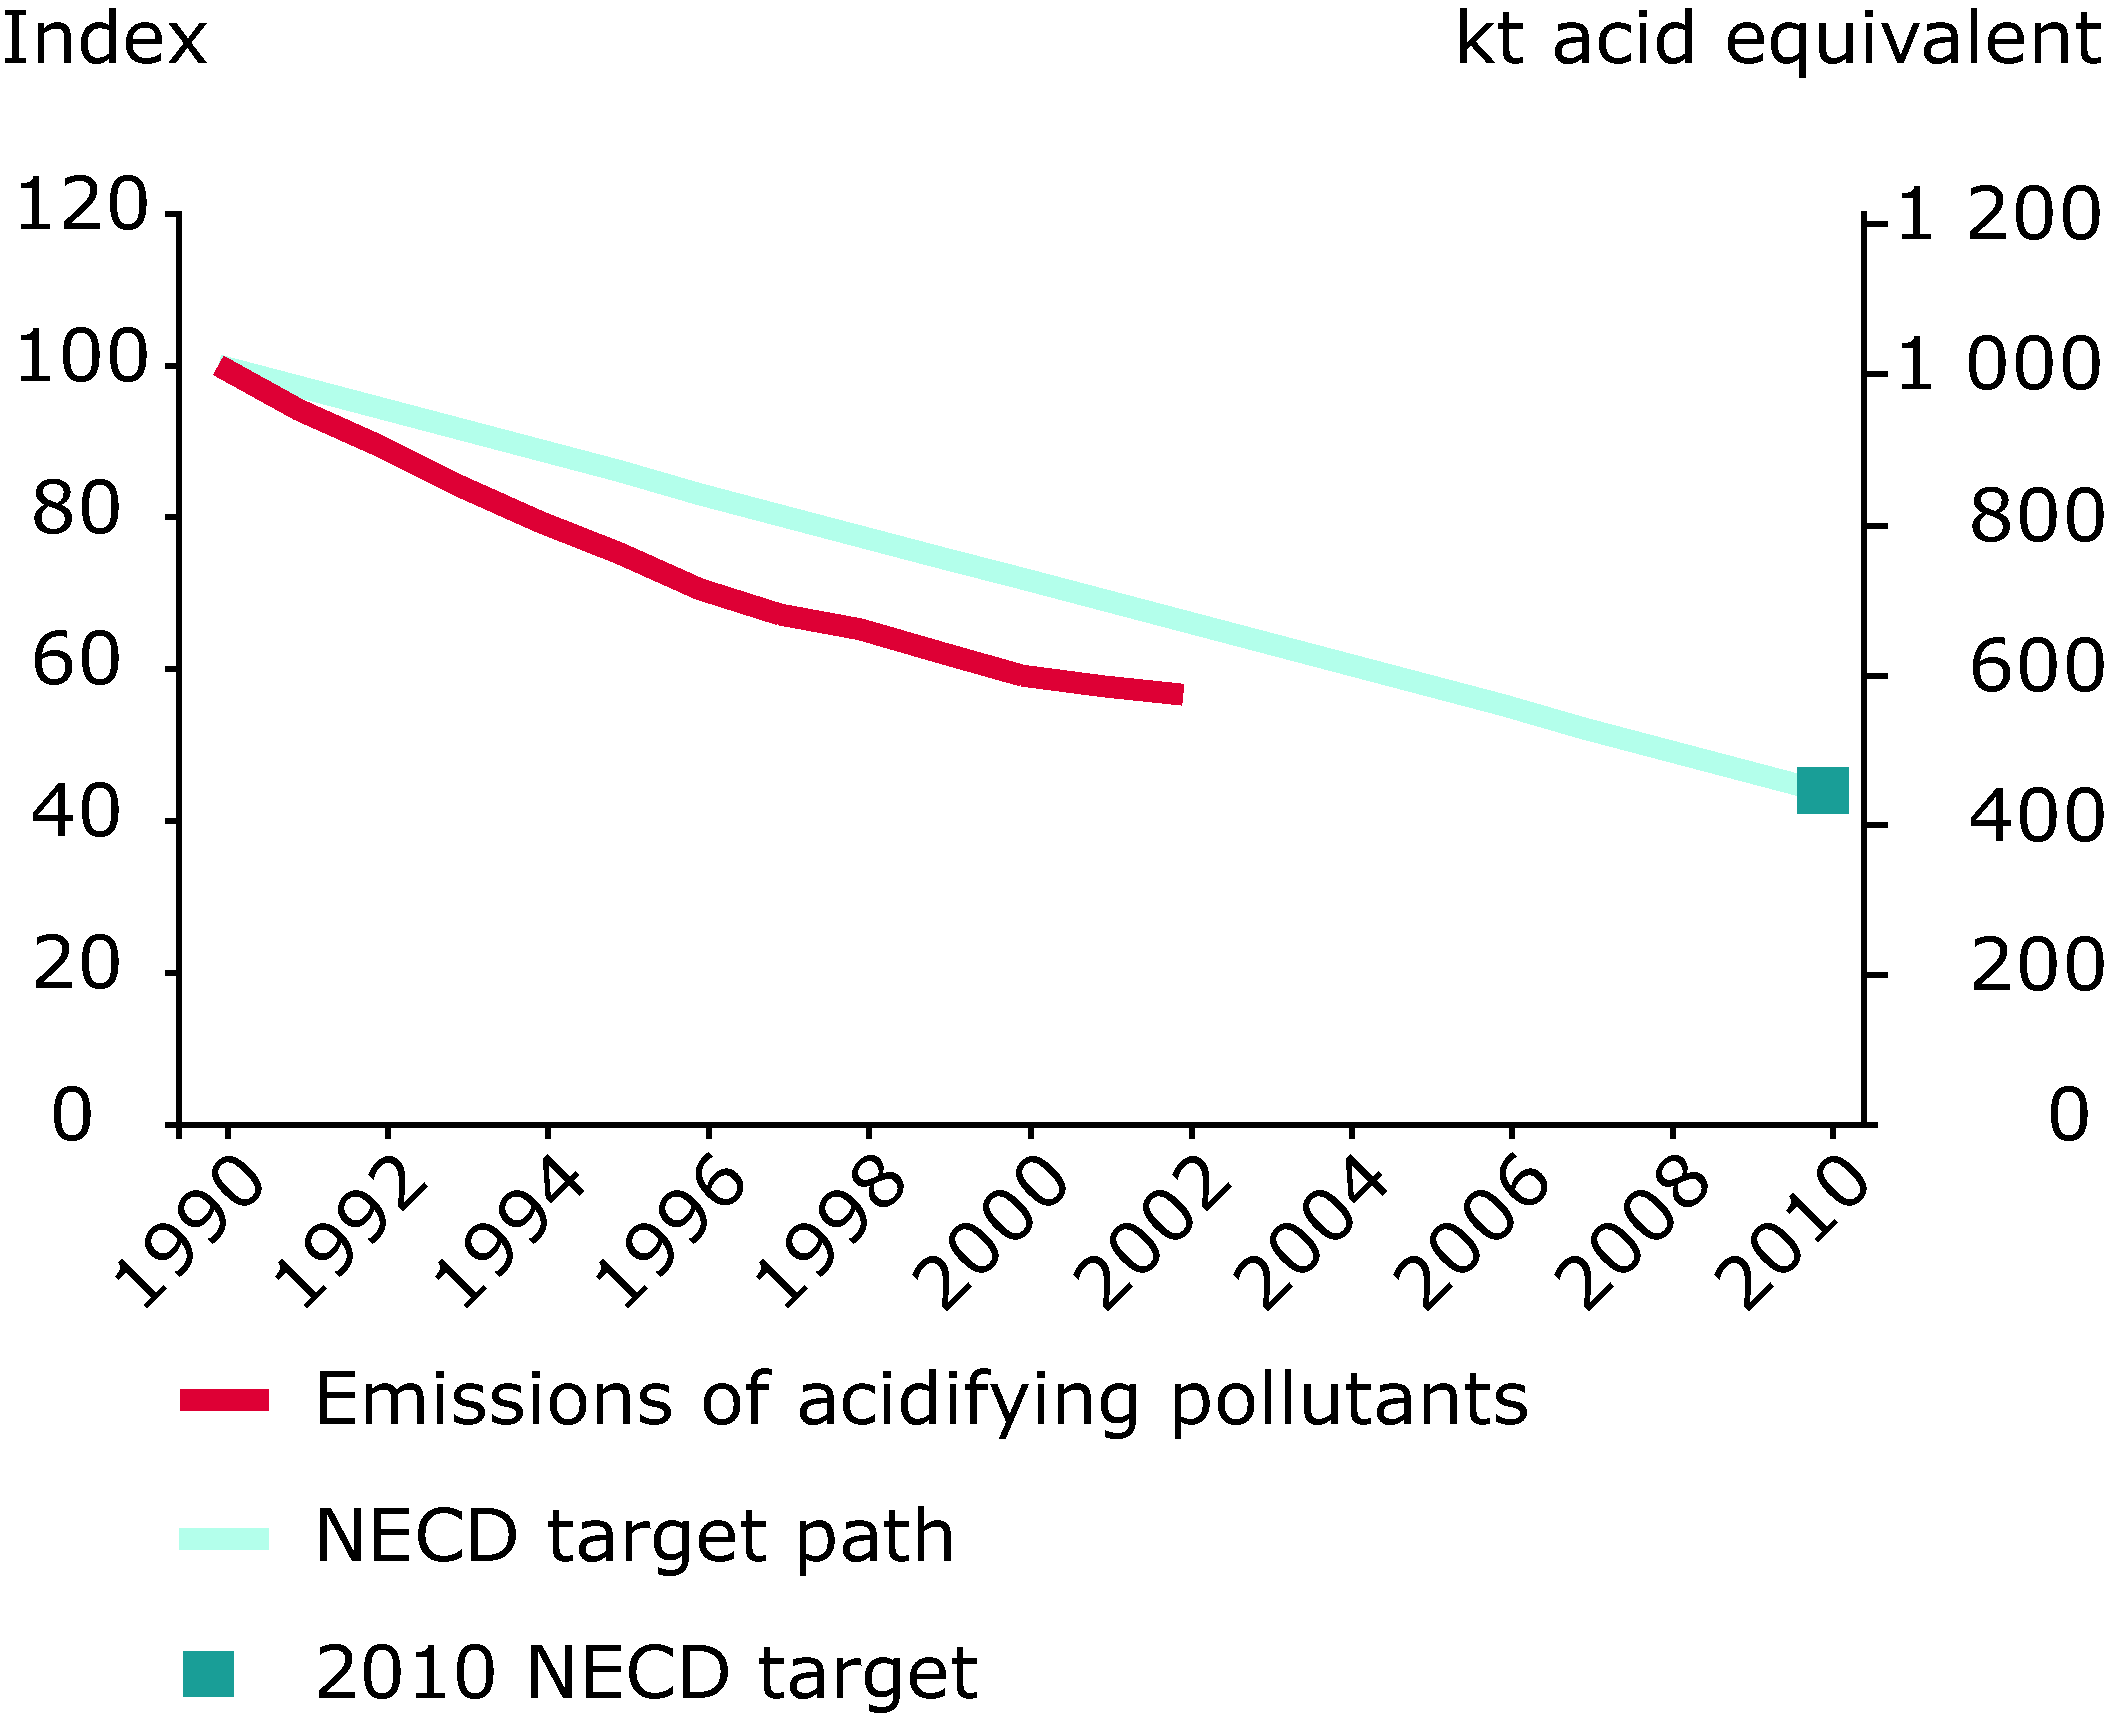 Emission trends of acidifying pollutants (EU-15), 1990-2002